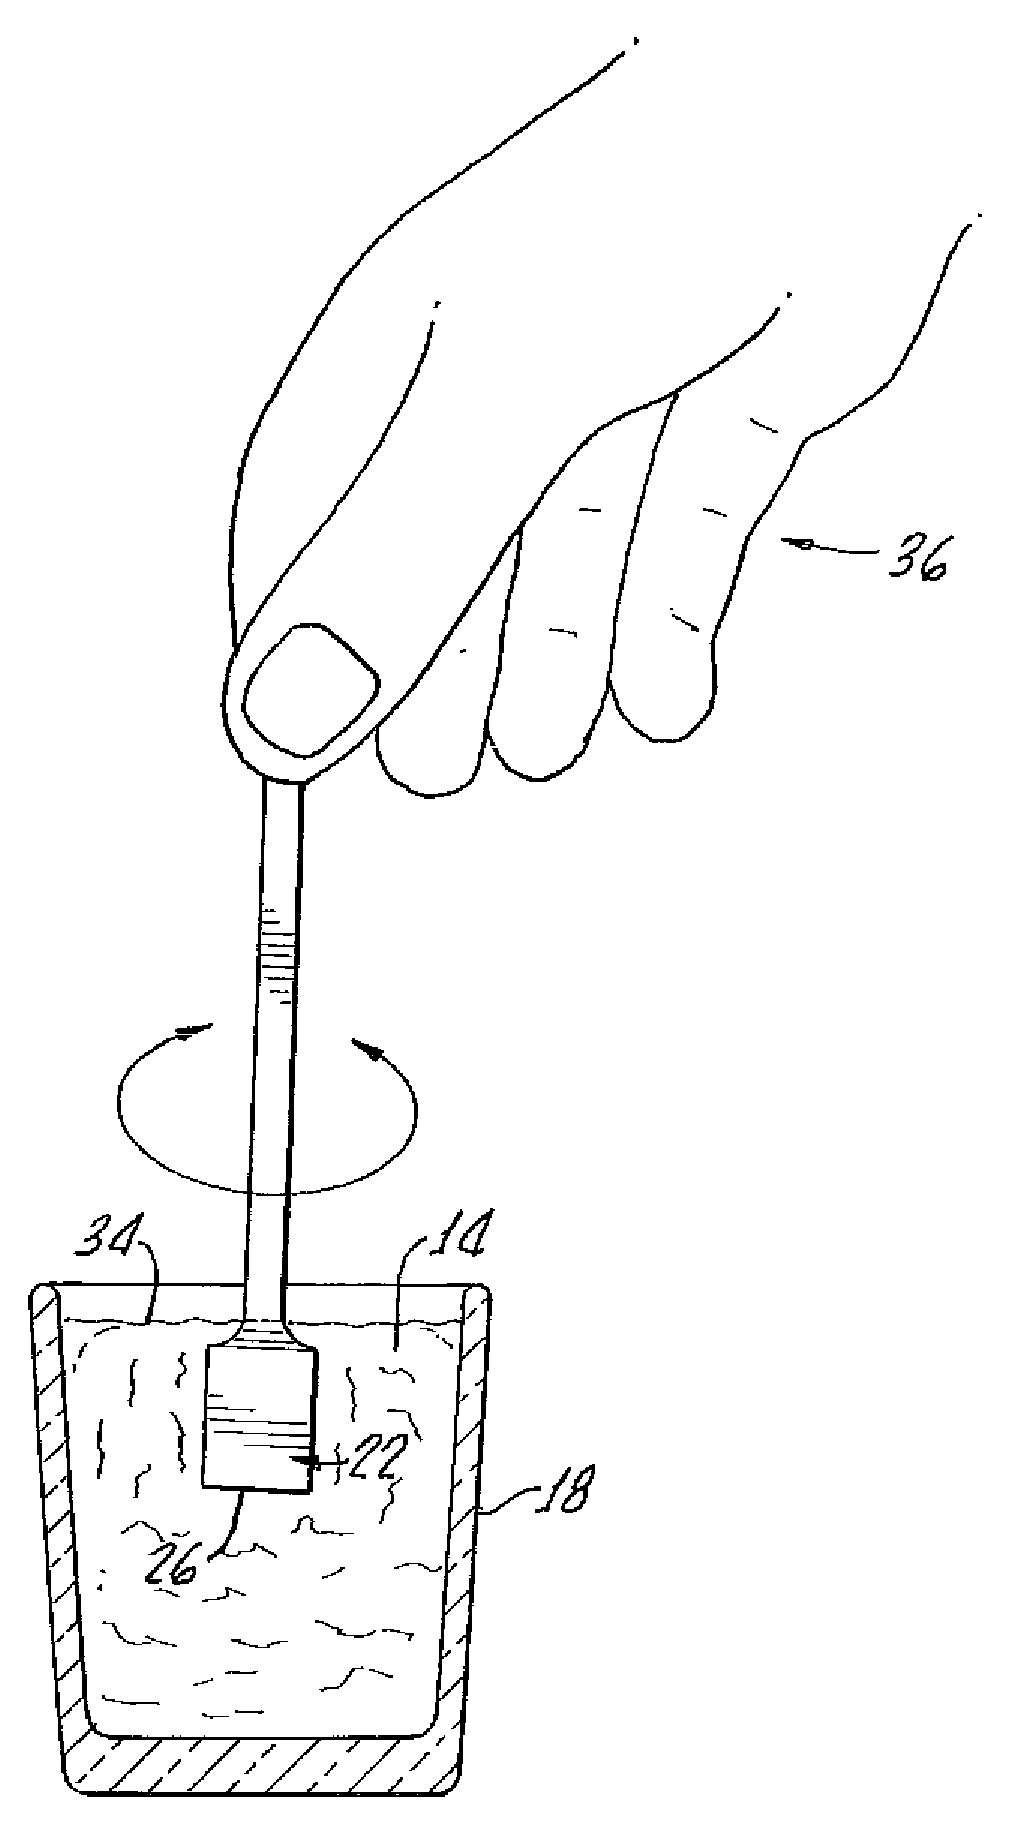 Magnetic aerator method